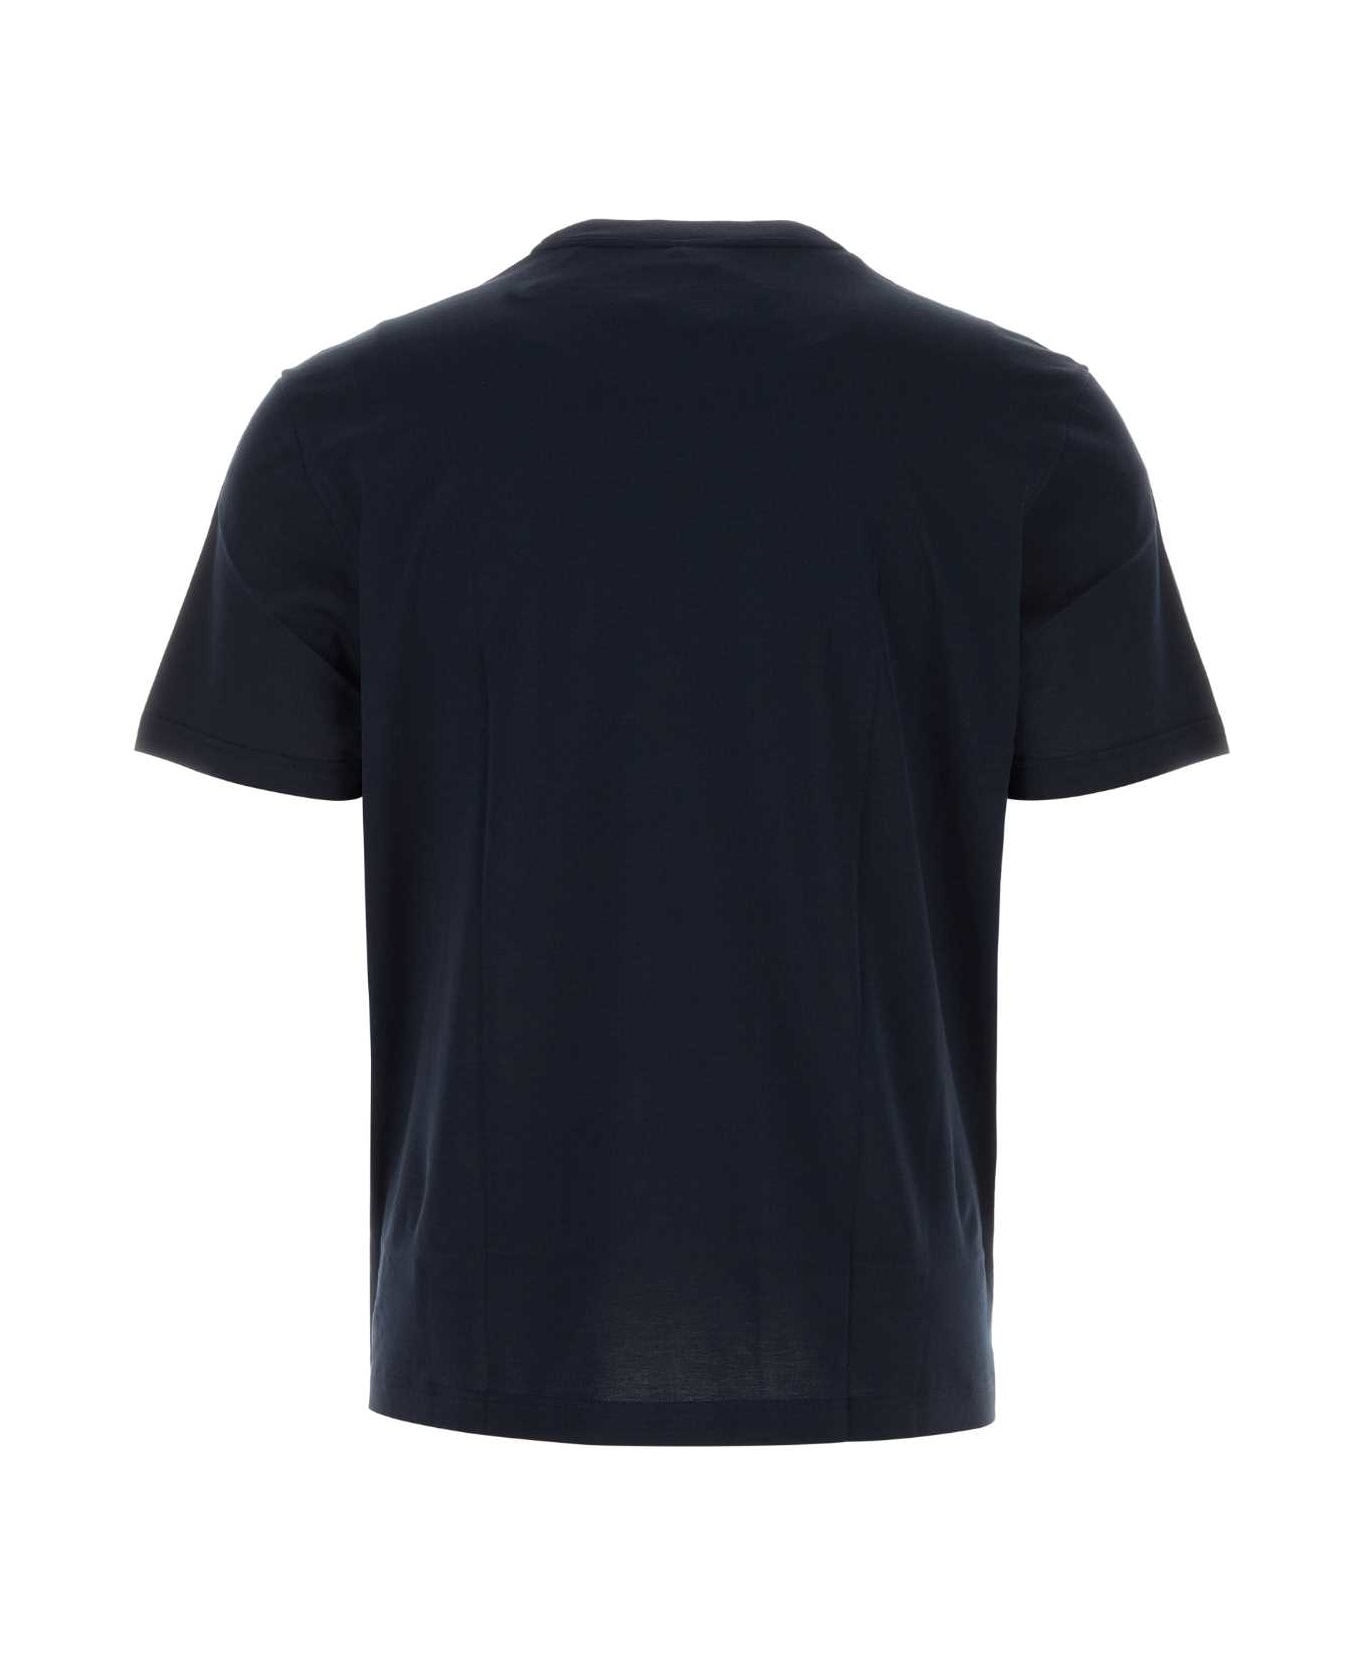 Brioni Midnight Blue Cotton T-shirt - NAVY